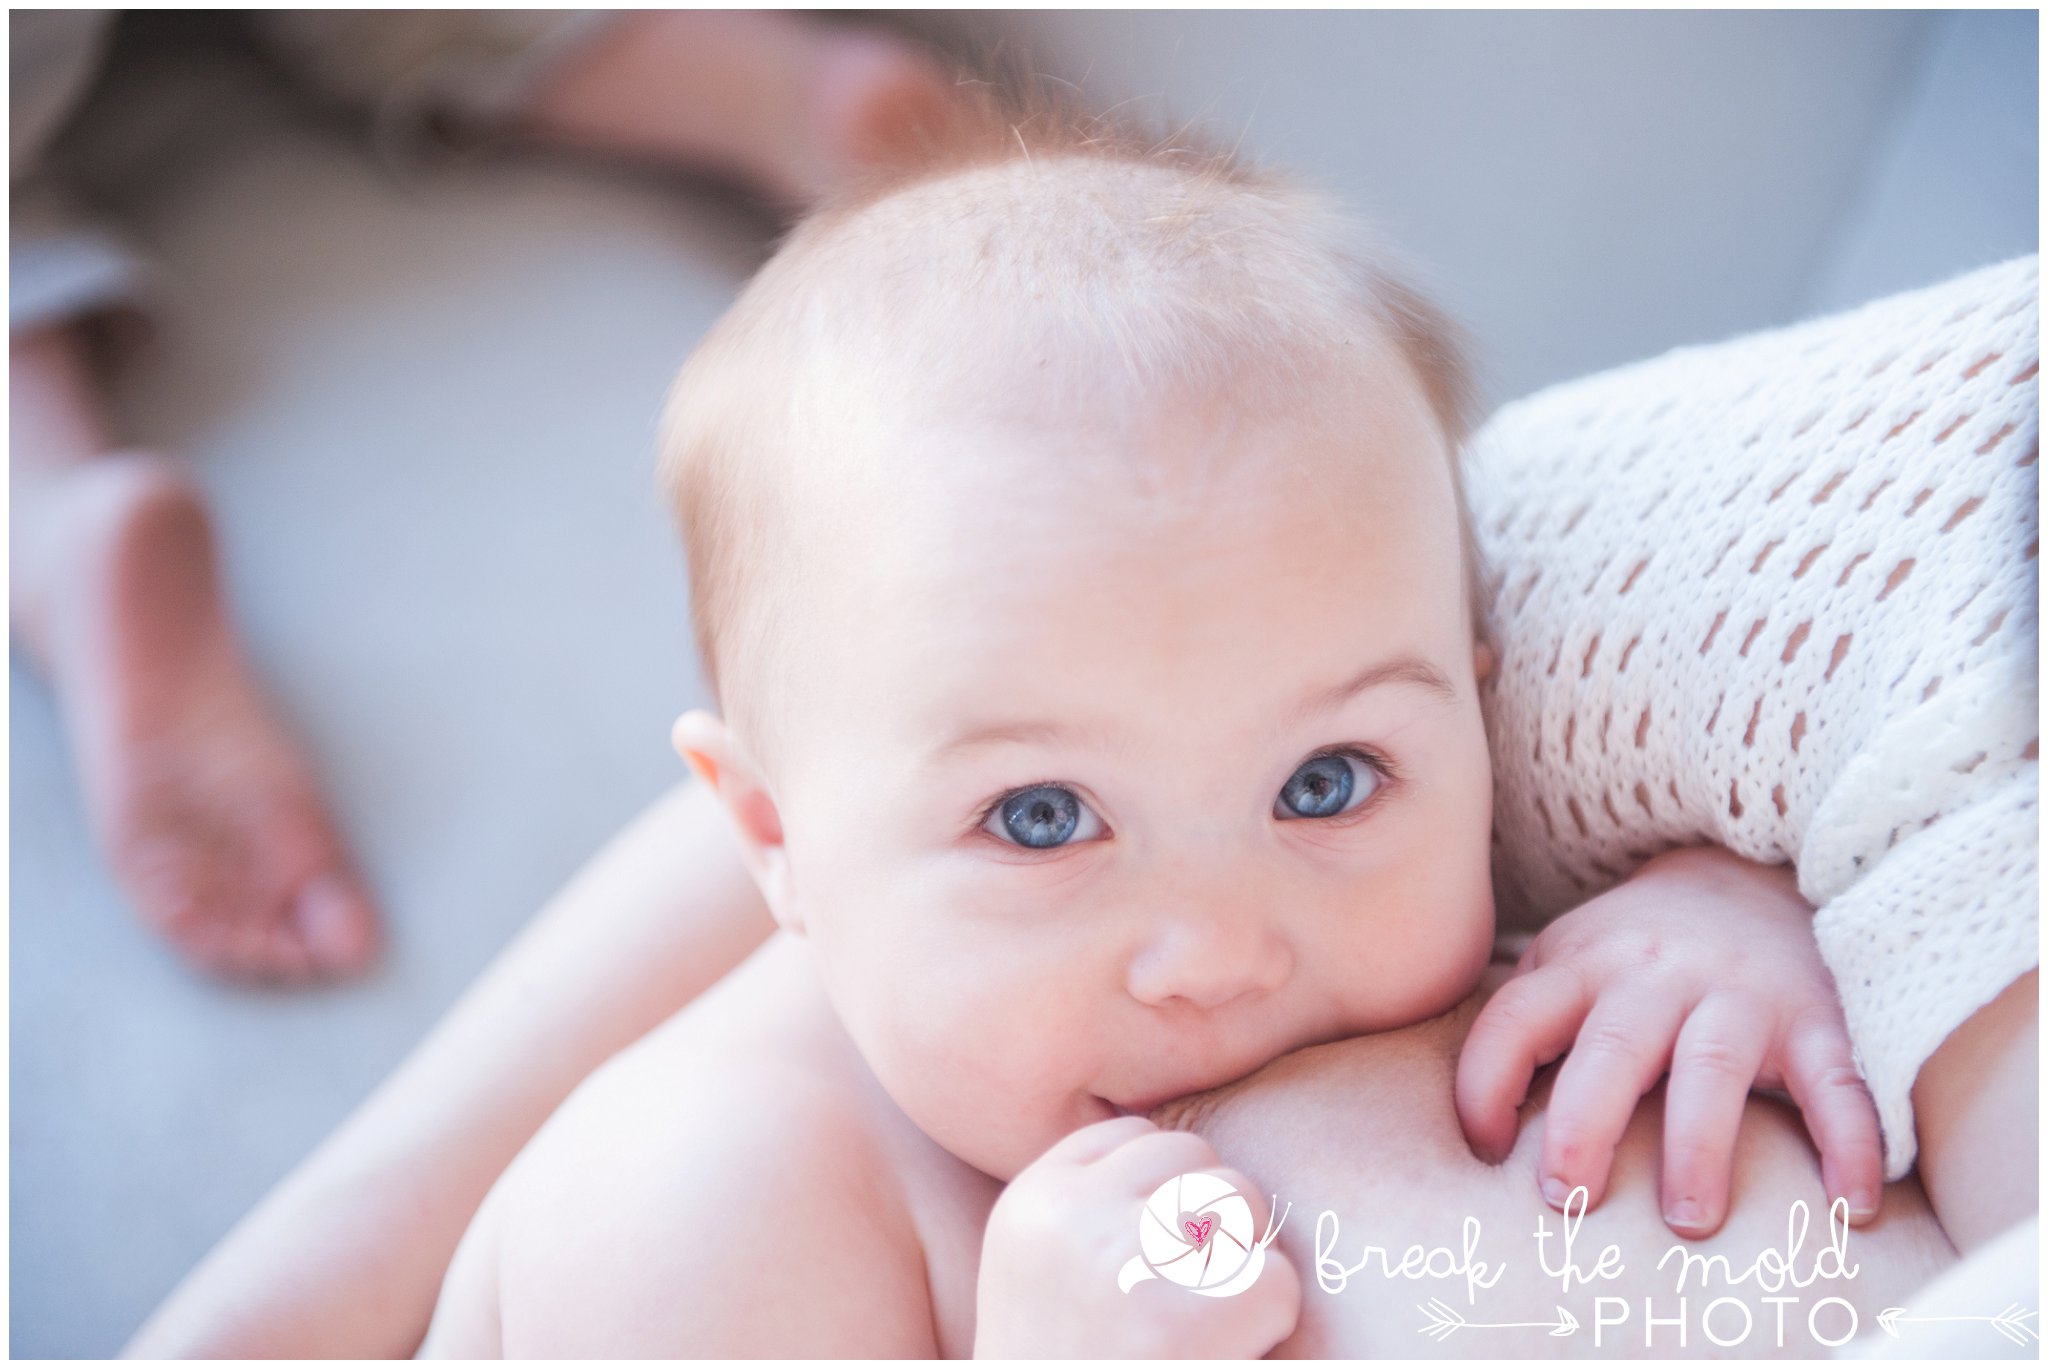 break-the-mold-photo-nursing-body-love-baby-pregnant-women-powerful-breastfeeding-sessions_7222.jpg